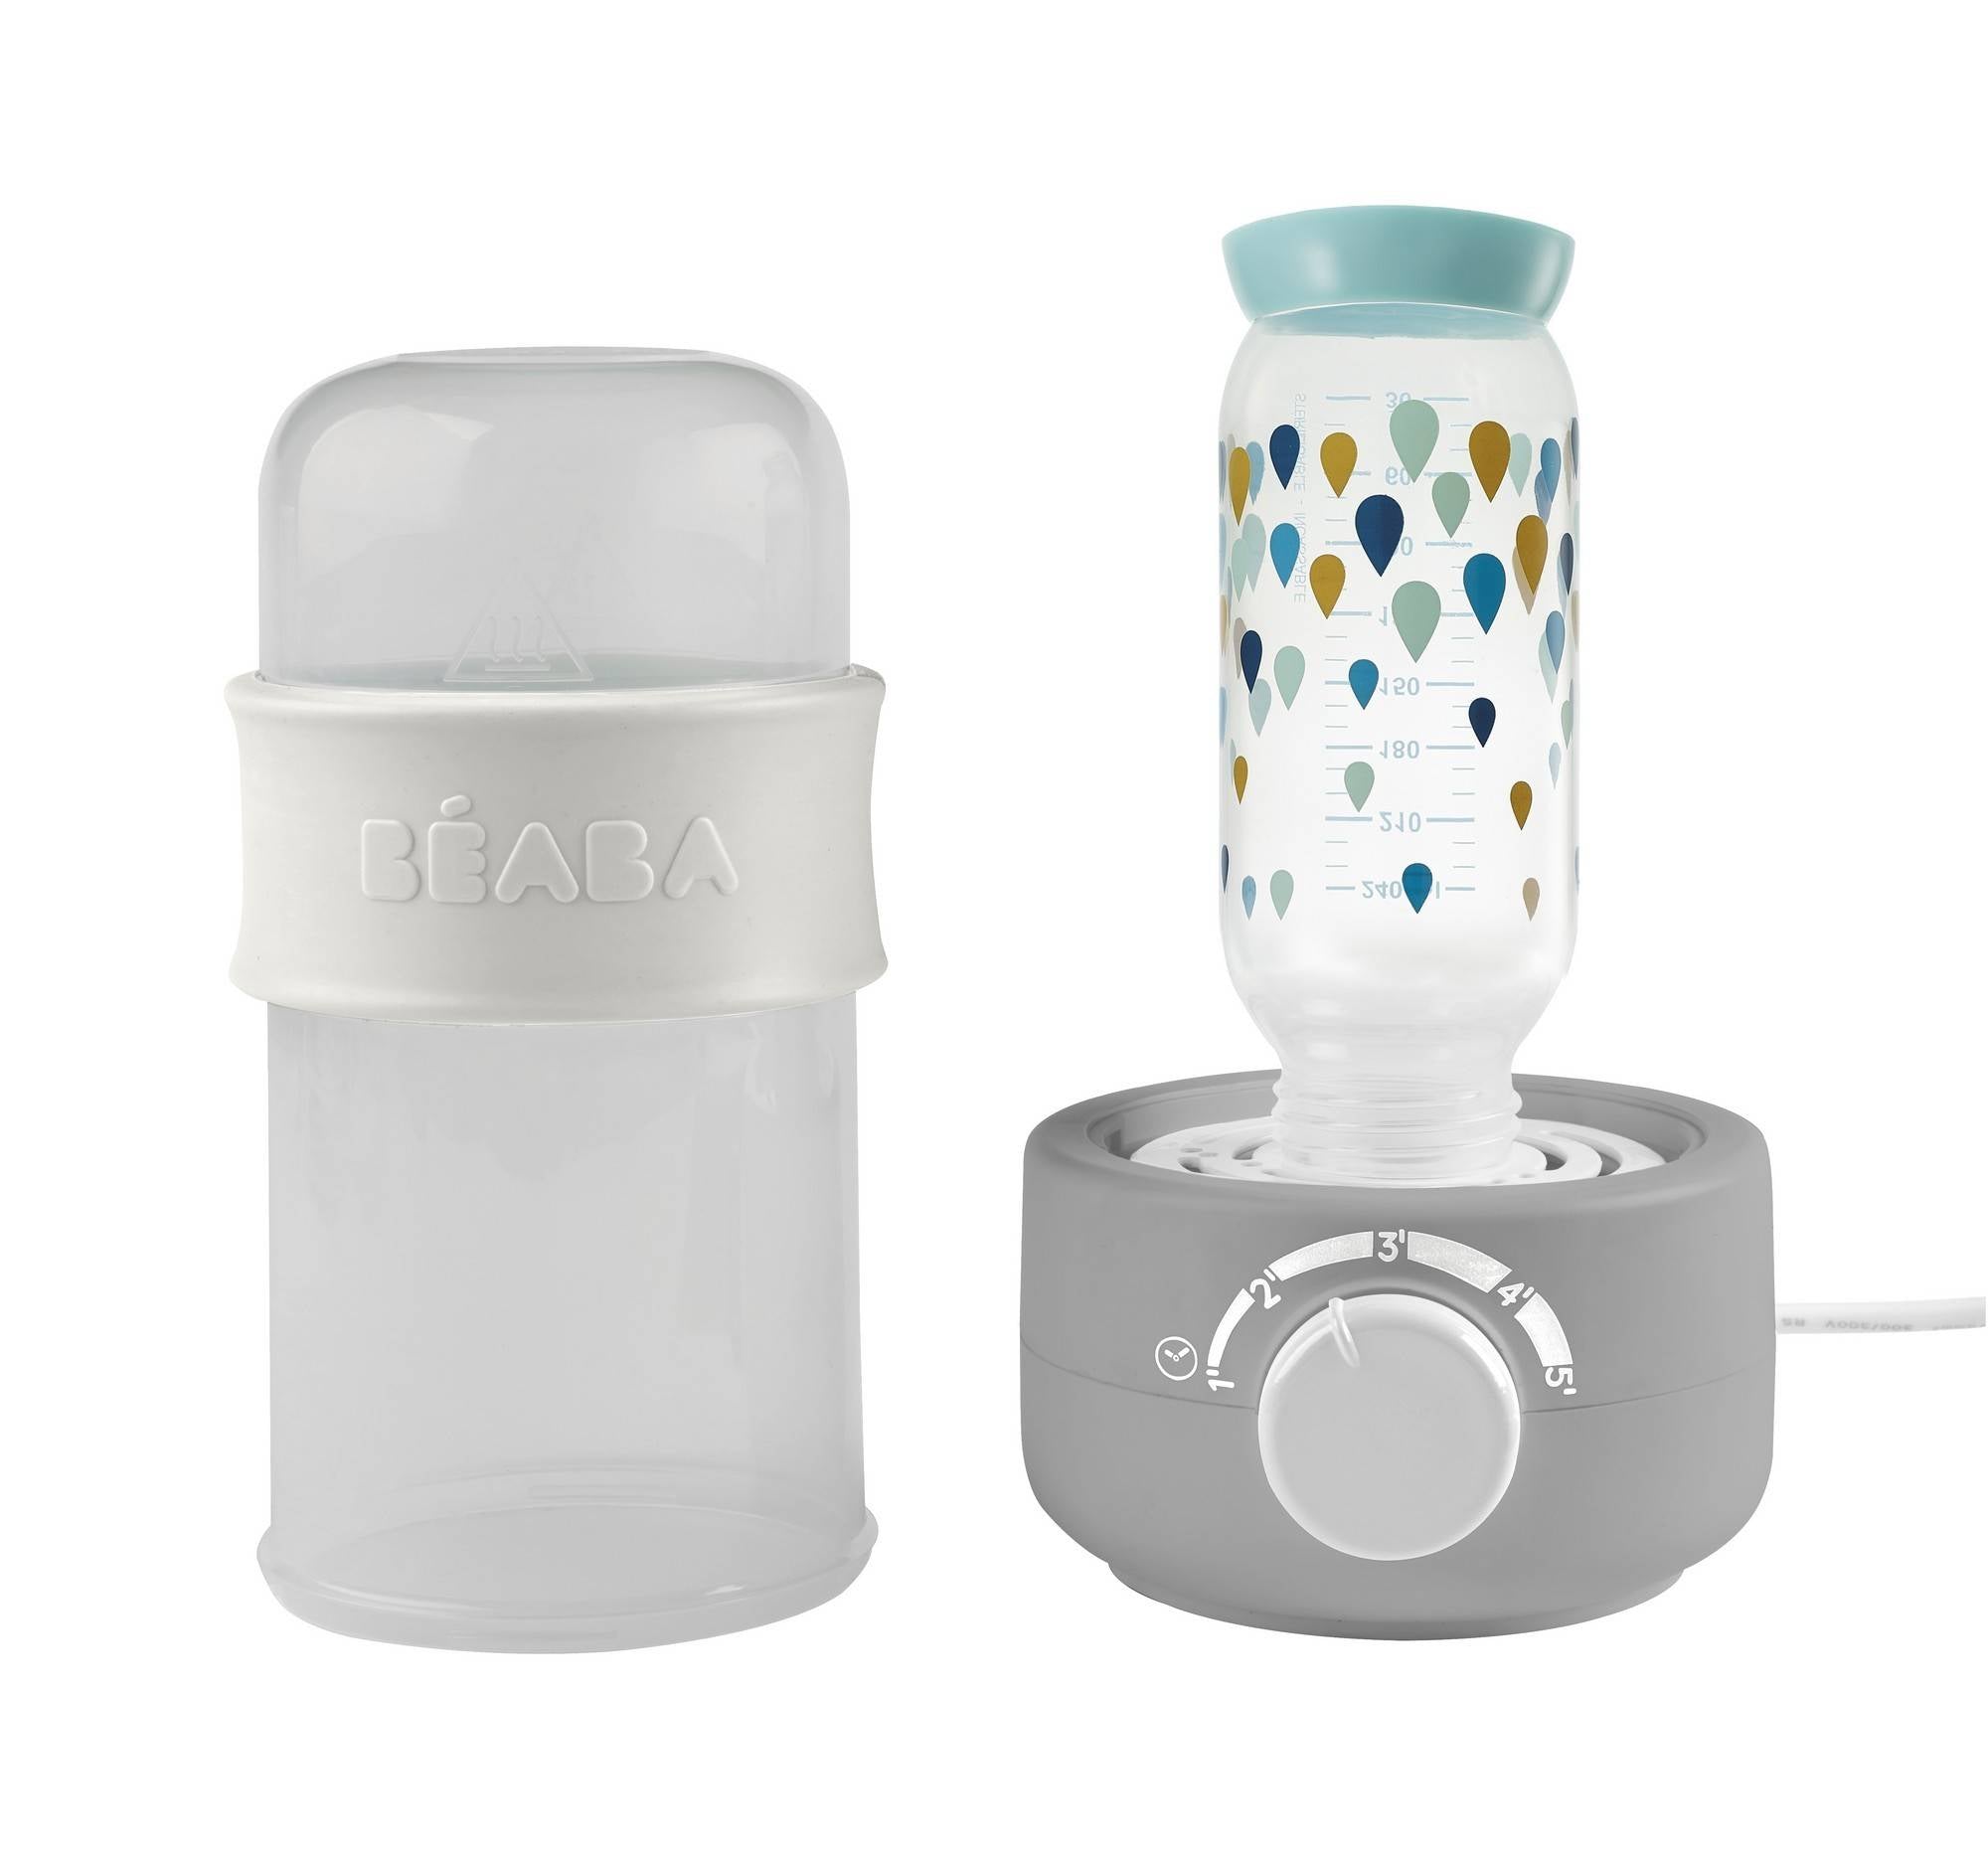 Beaba Baby Milk Bottle Warmer Bundle Limited Edition-Bebehaus